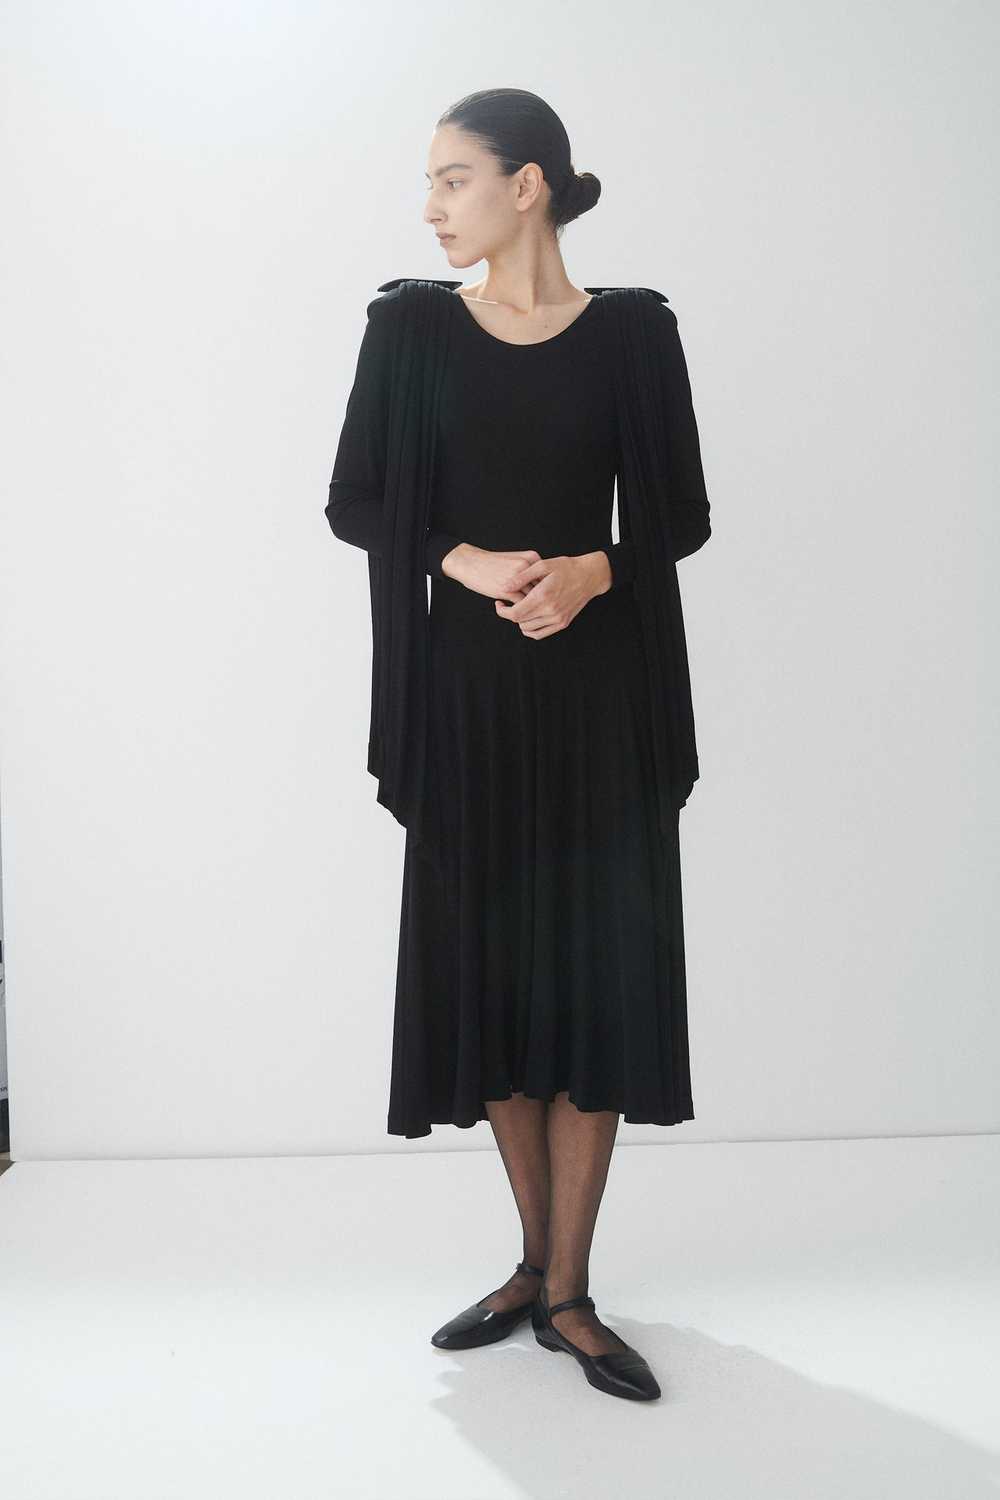 Jean Muir Black Draped Dress - image 4